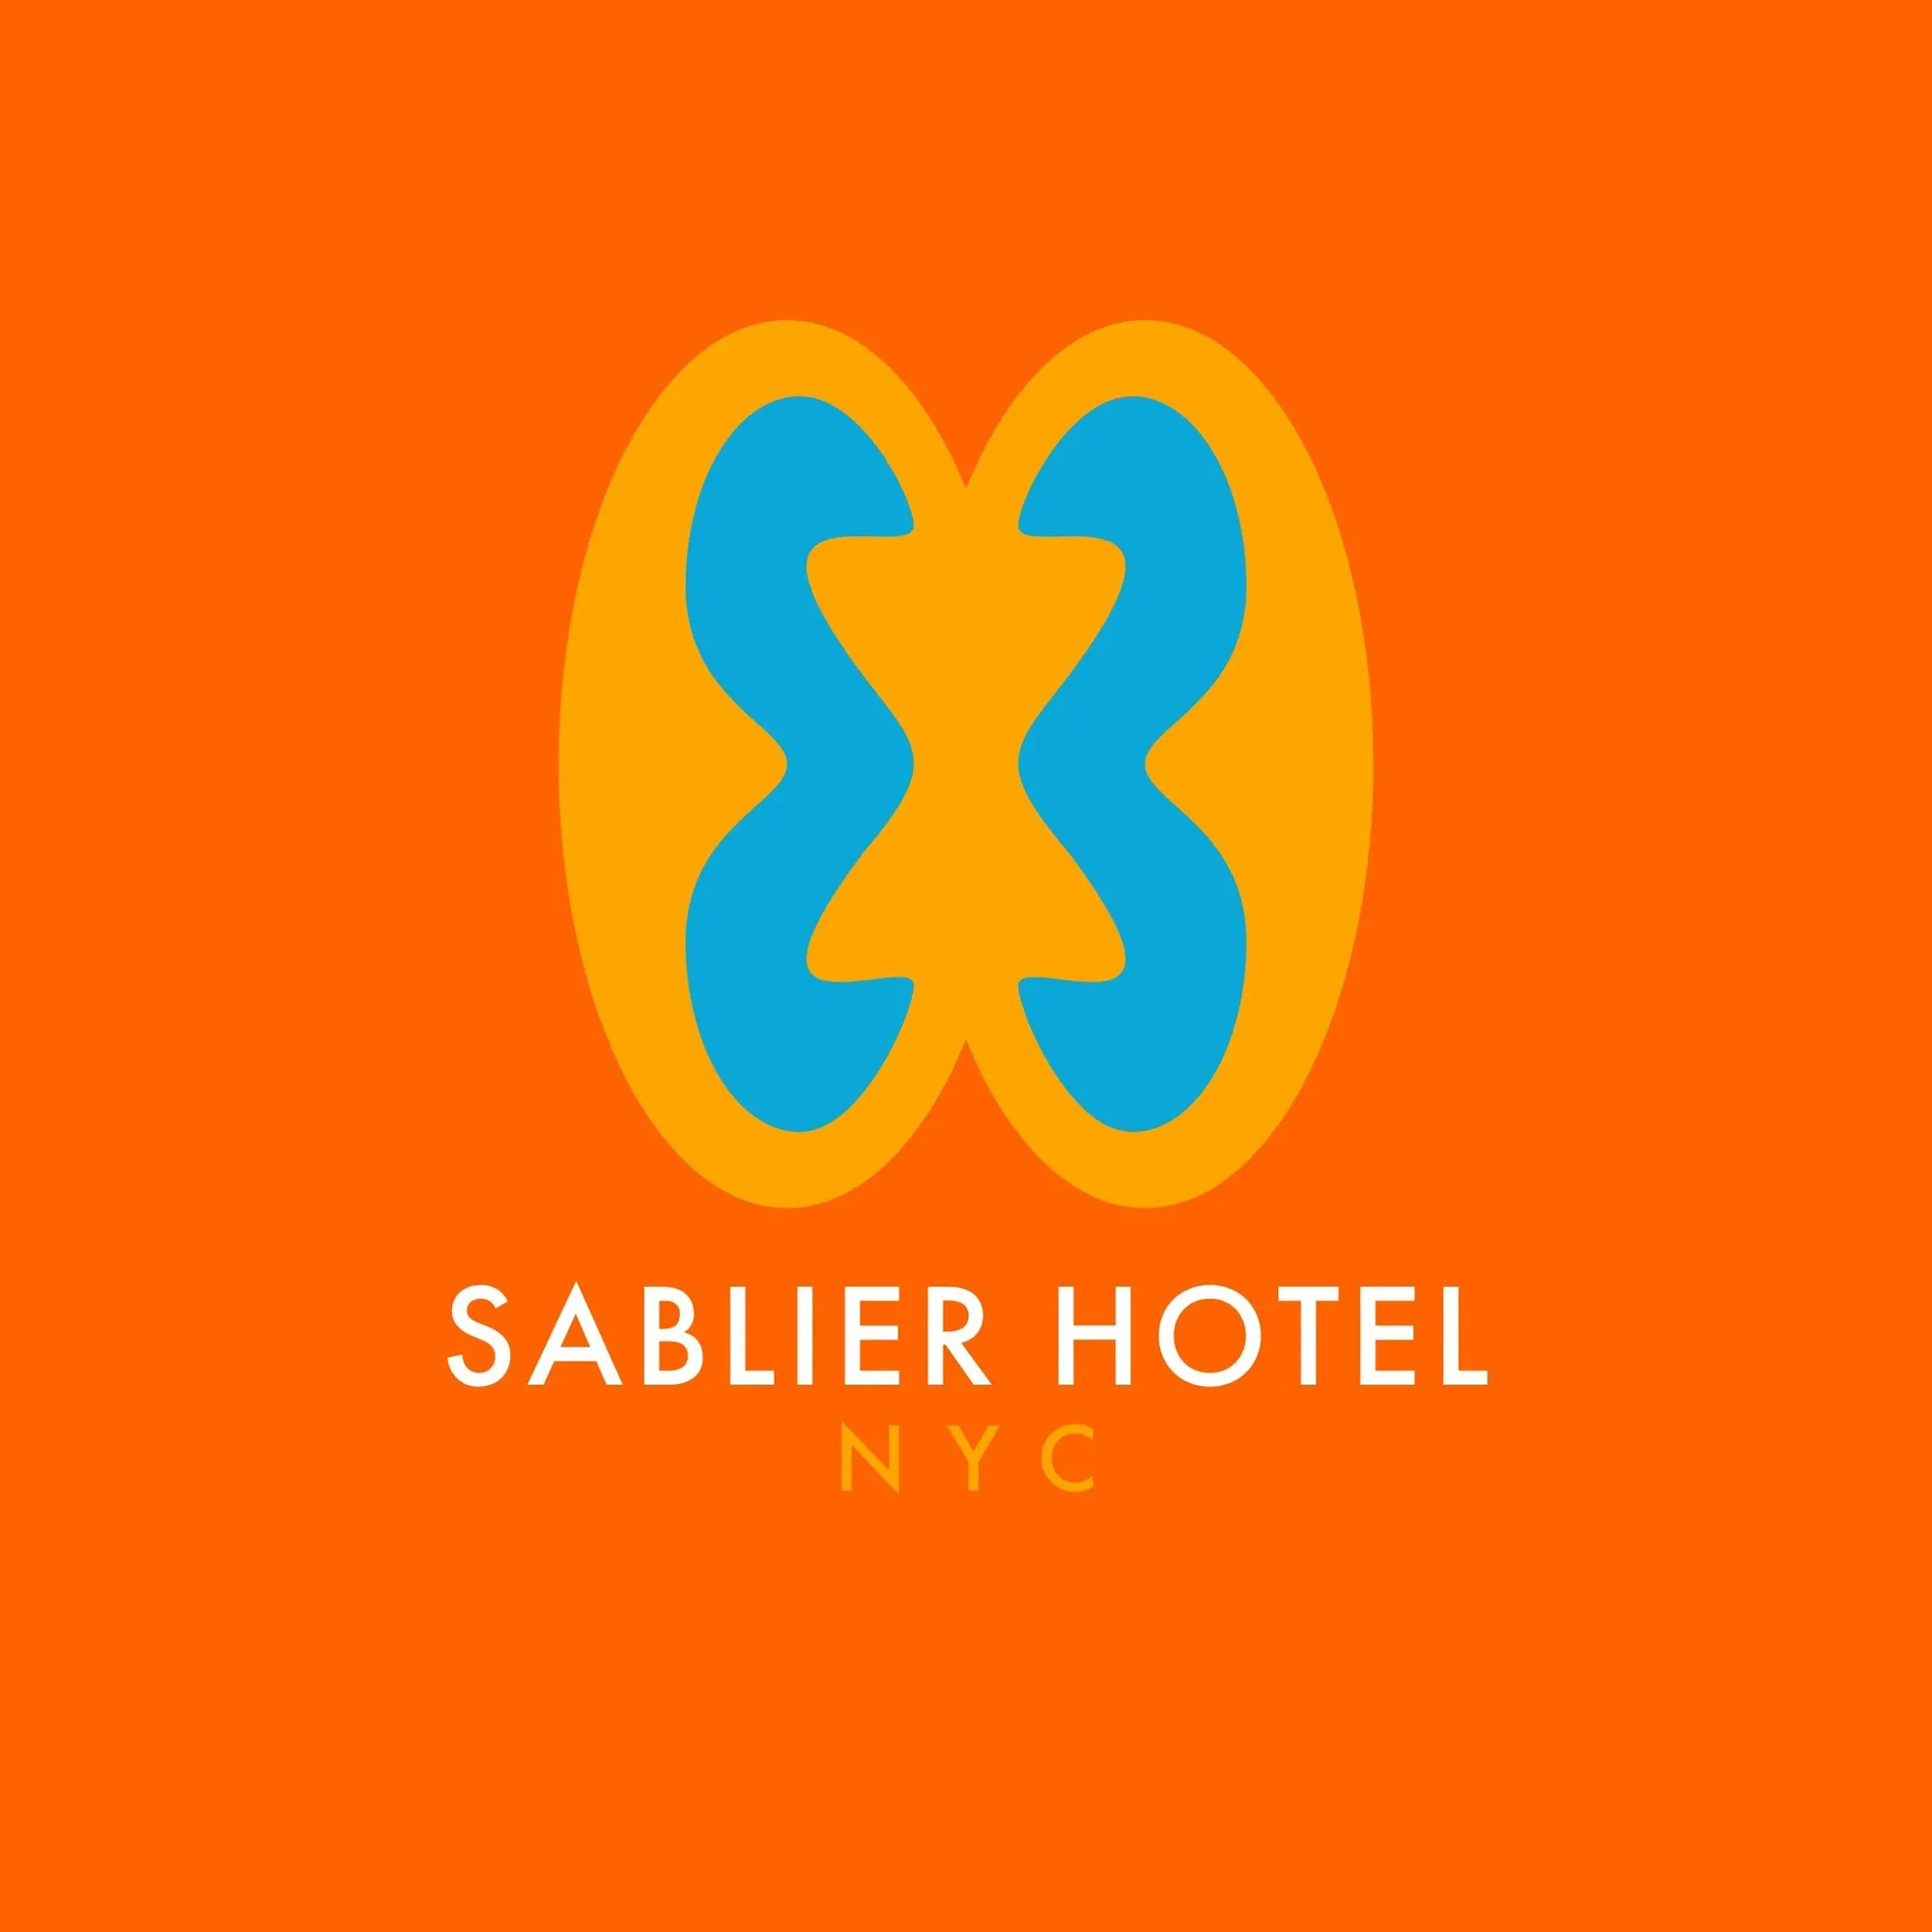 modern orange hotel logo